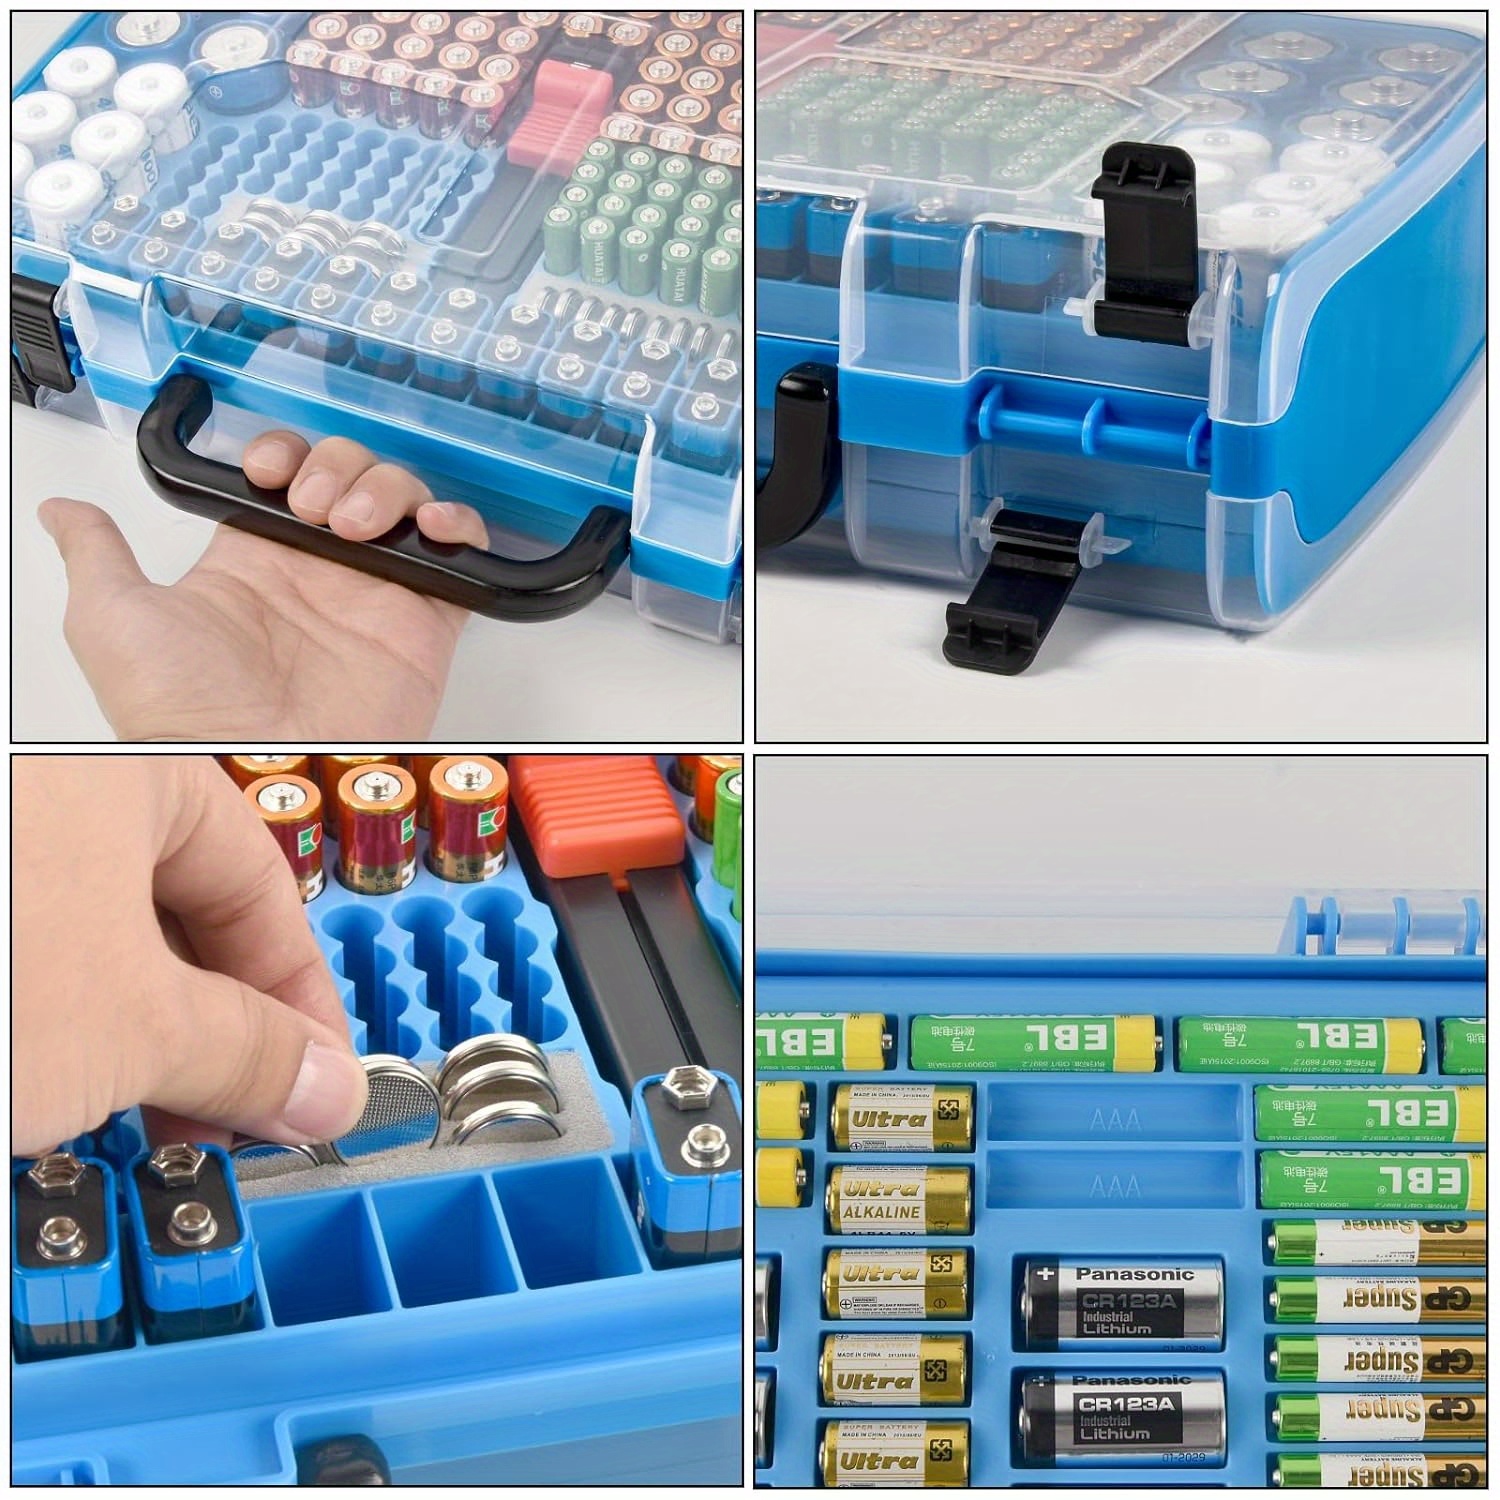  Battery Storage Organizer Case Holder Box with Tester